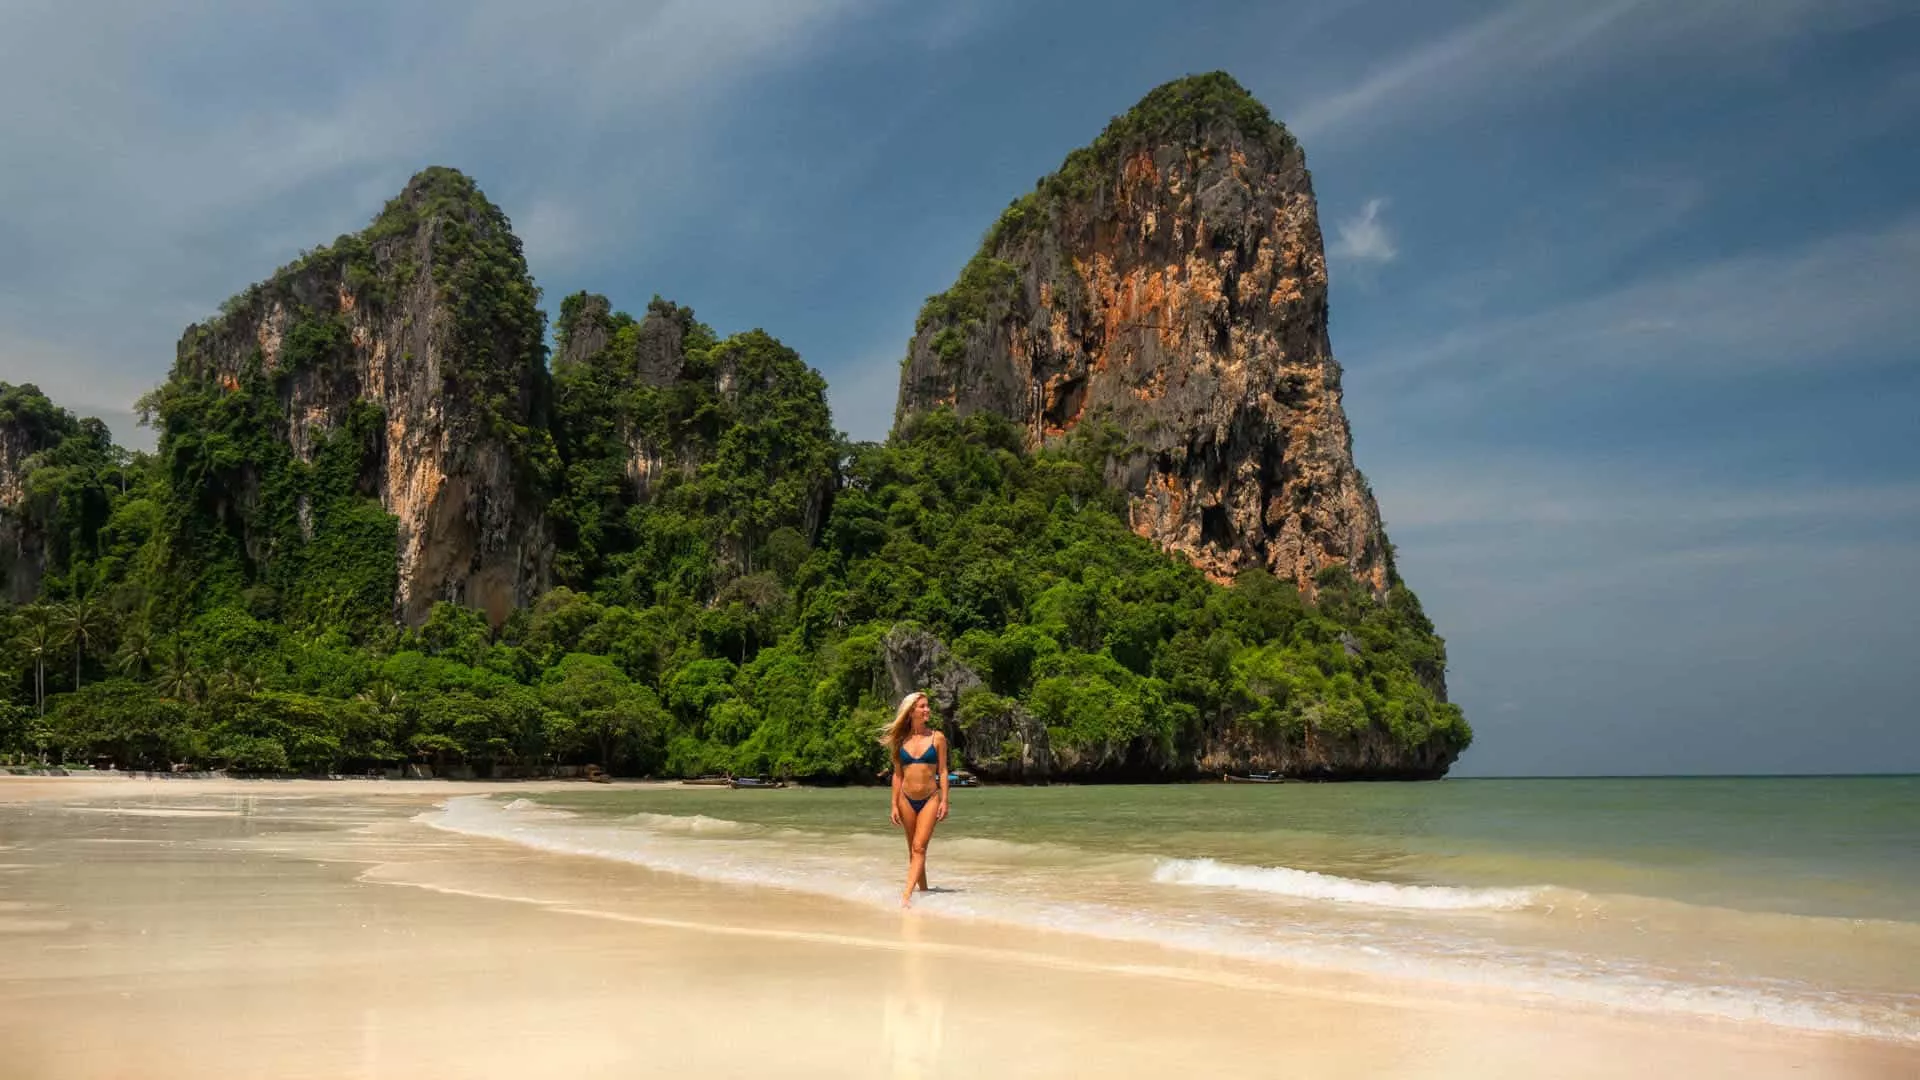 Railay Beach in Thailand, Central Asia | Beaches,Love & Romance - Rated 3.8